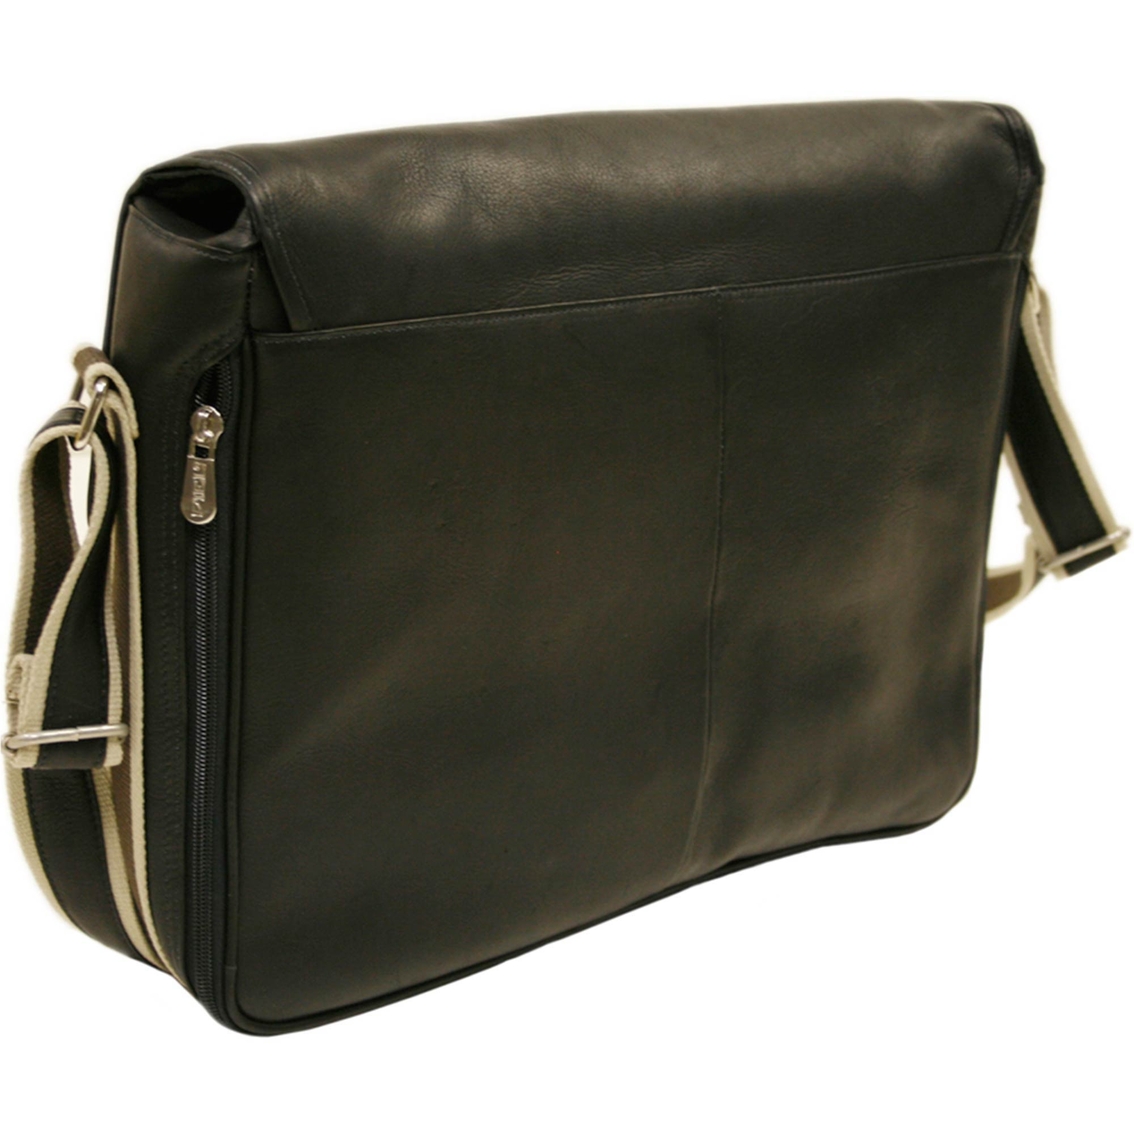 Piel Leather Classic Expandable Messenger Bag - Image 2 of 3